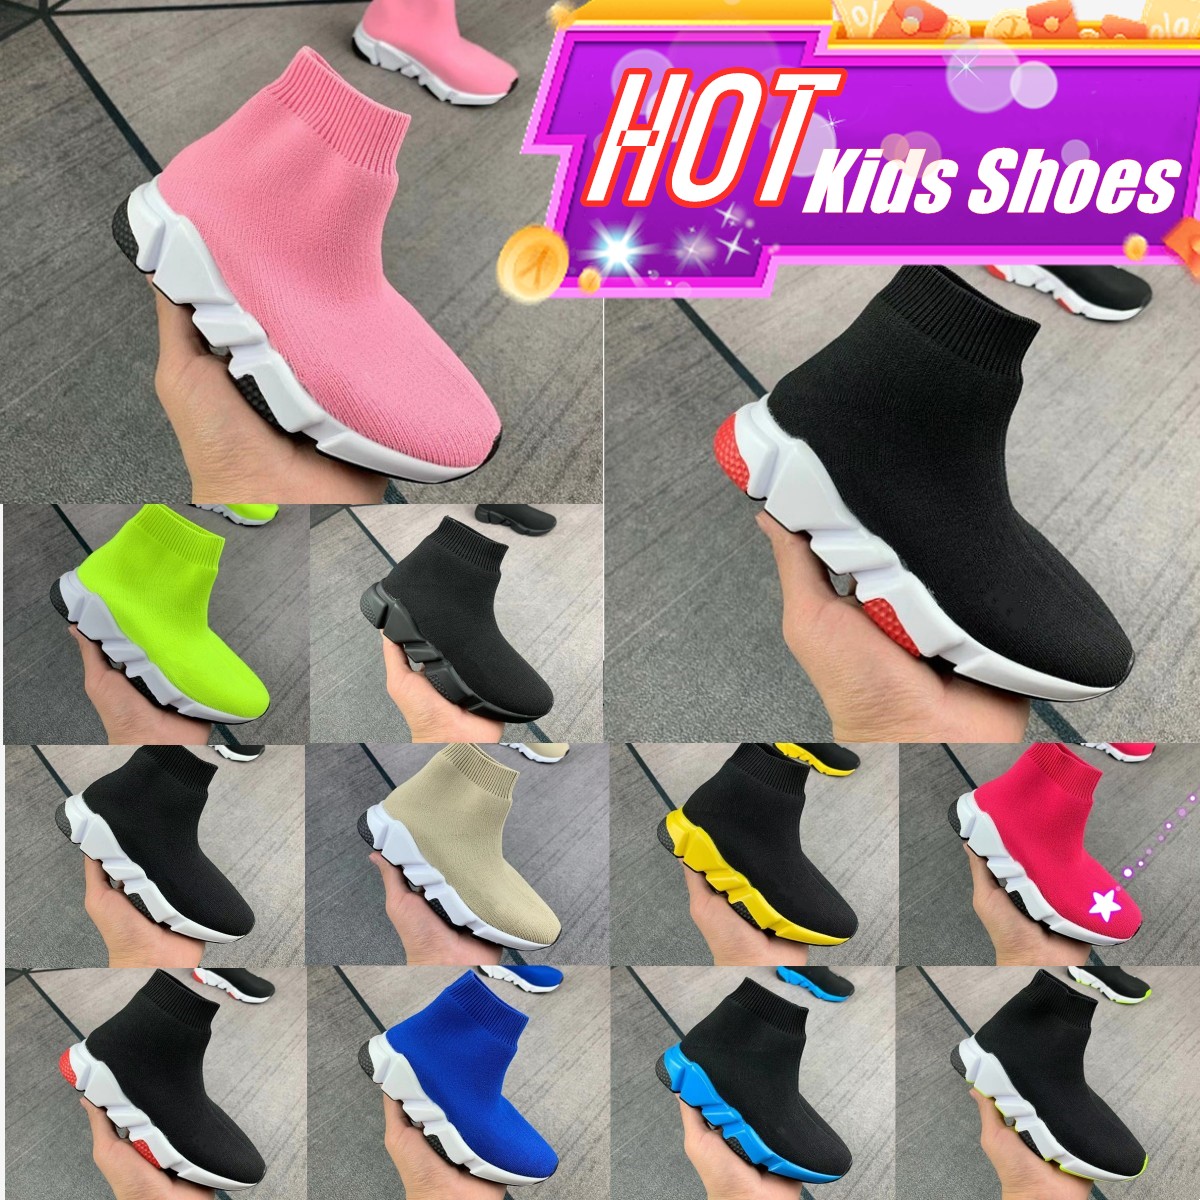 

kids shoes sock baby boots shoe speed sneaker boot designer high black trainers girls kid youth toddler infants children girl toddlres desogmer 72oz#